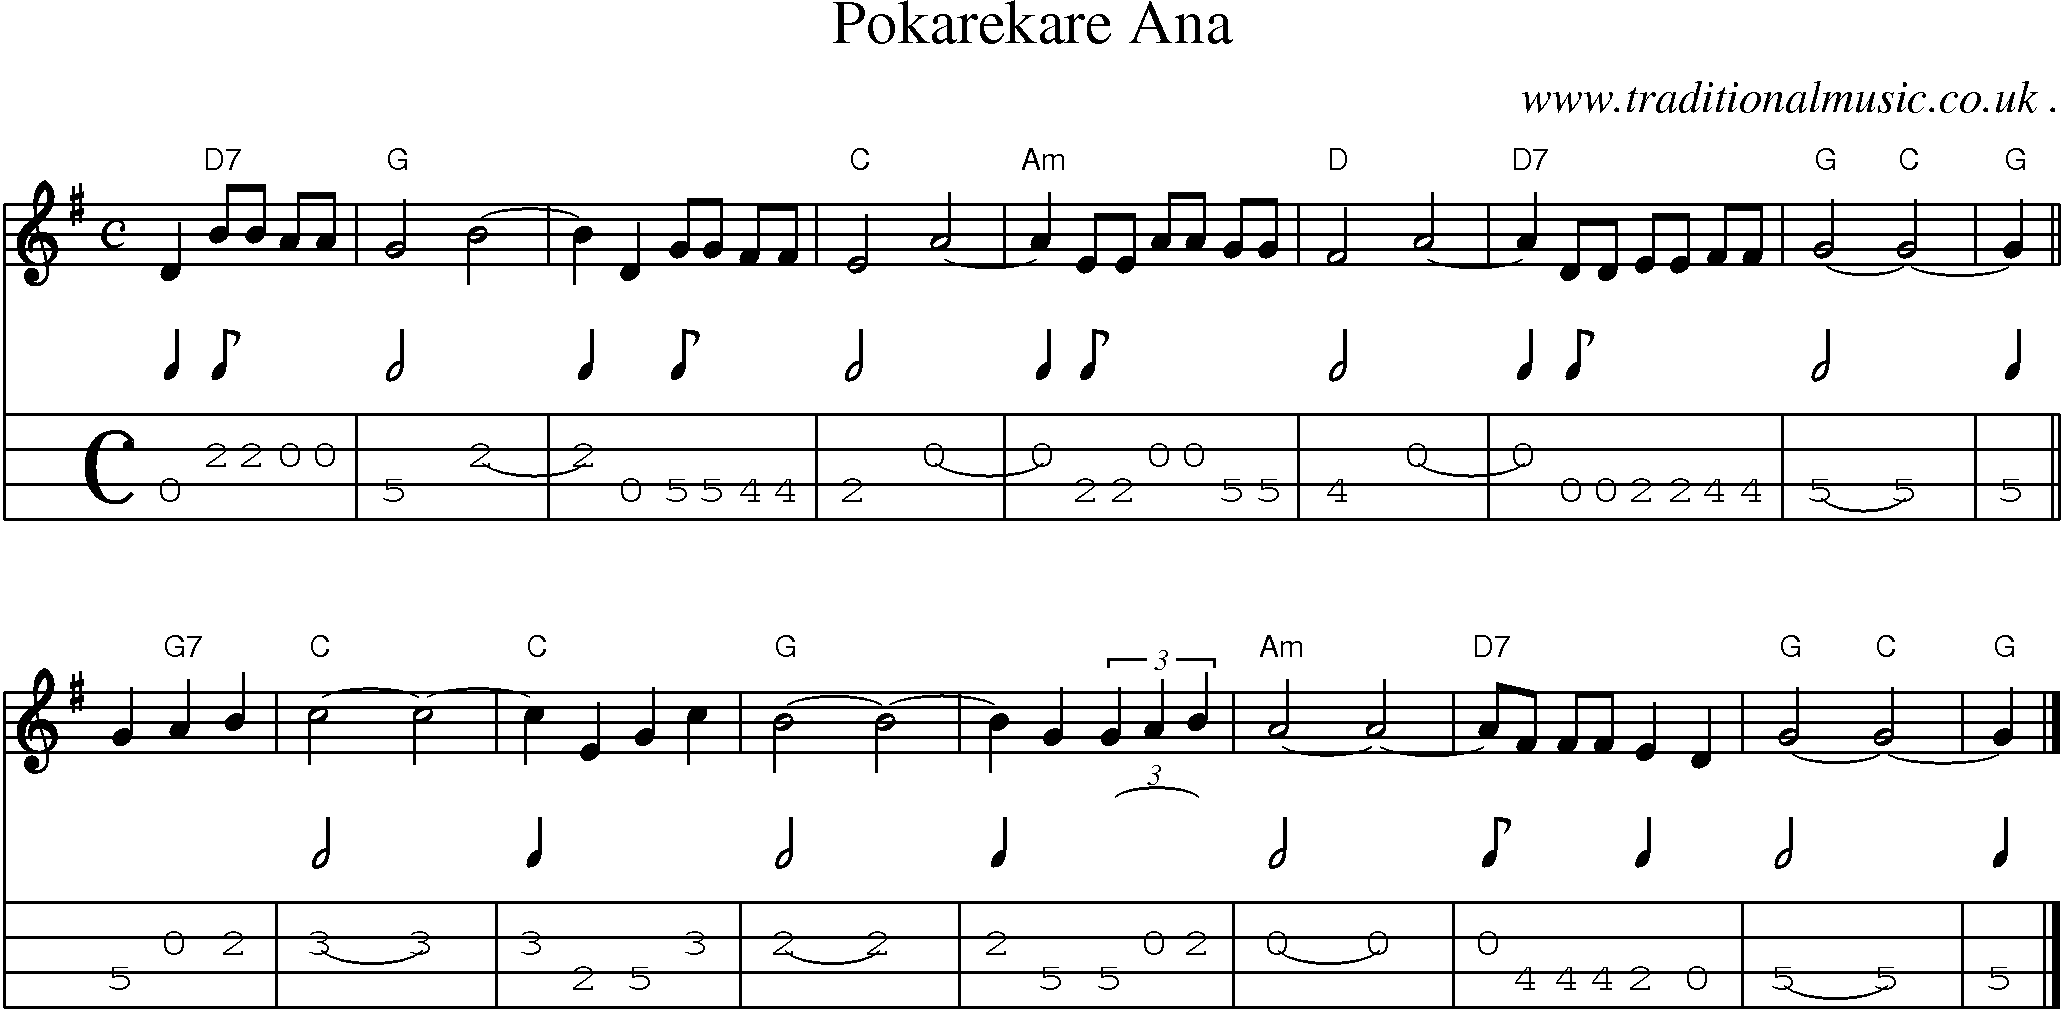 Sheet-music  score, Chords and Mandolin Tabs for Pokarekare Ana